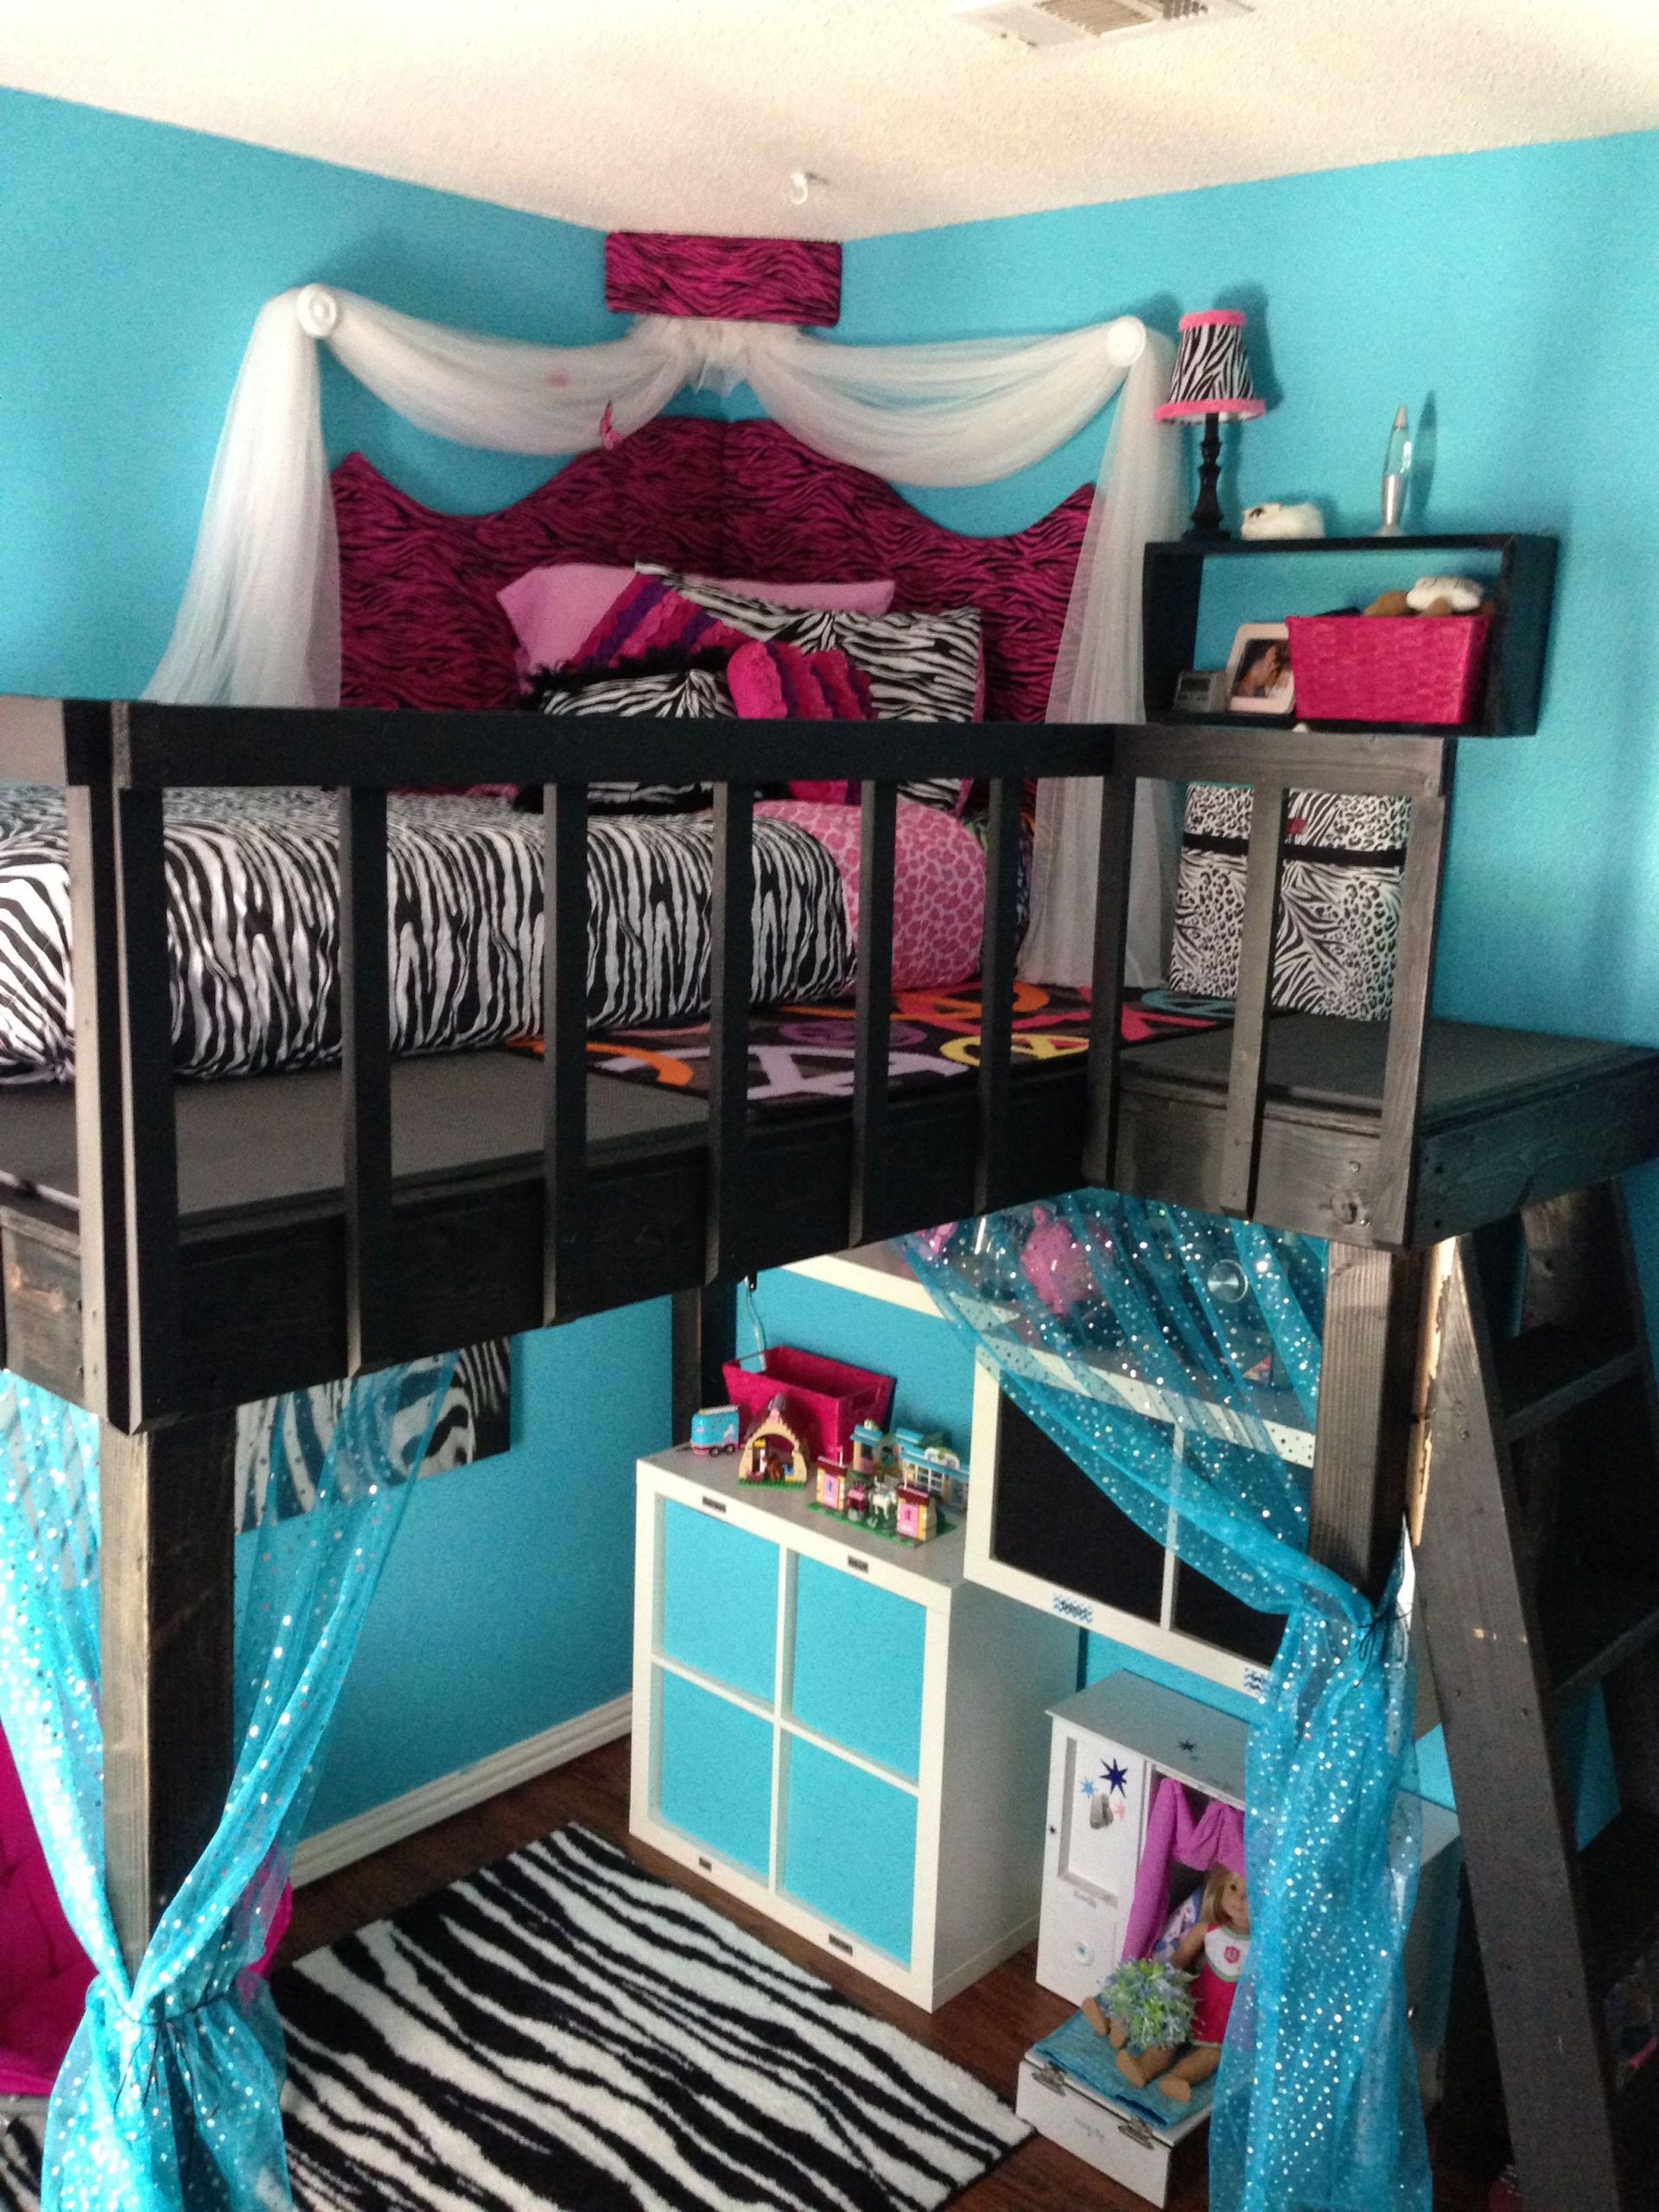 DIY Kids Bed With Storage
 DIY loft bed foam core corner headboard and IKEA storage